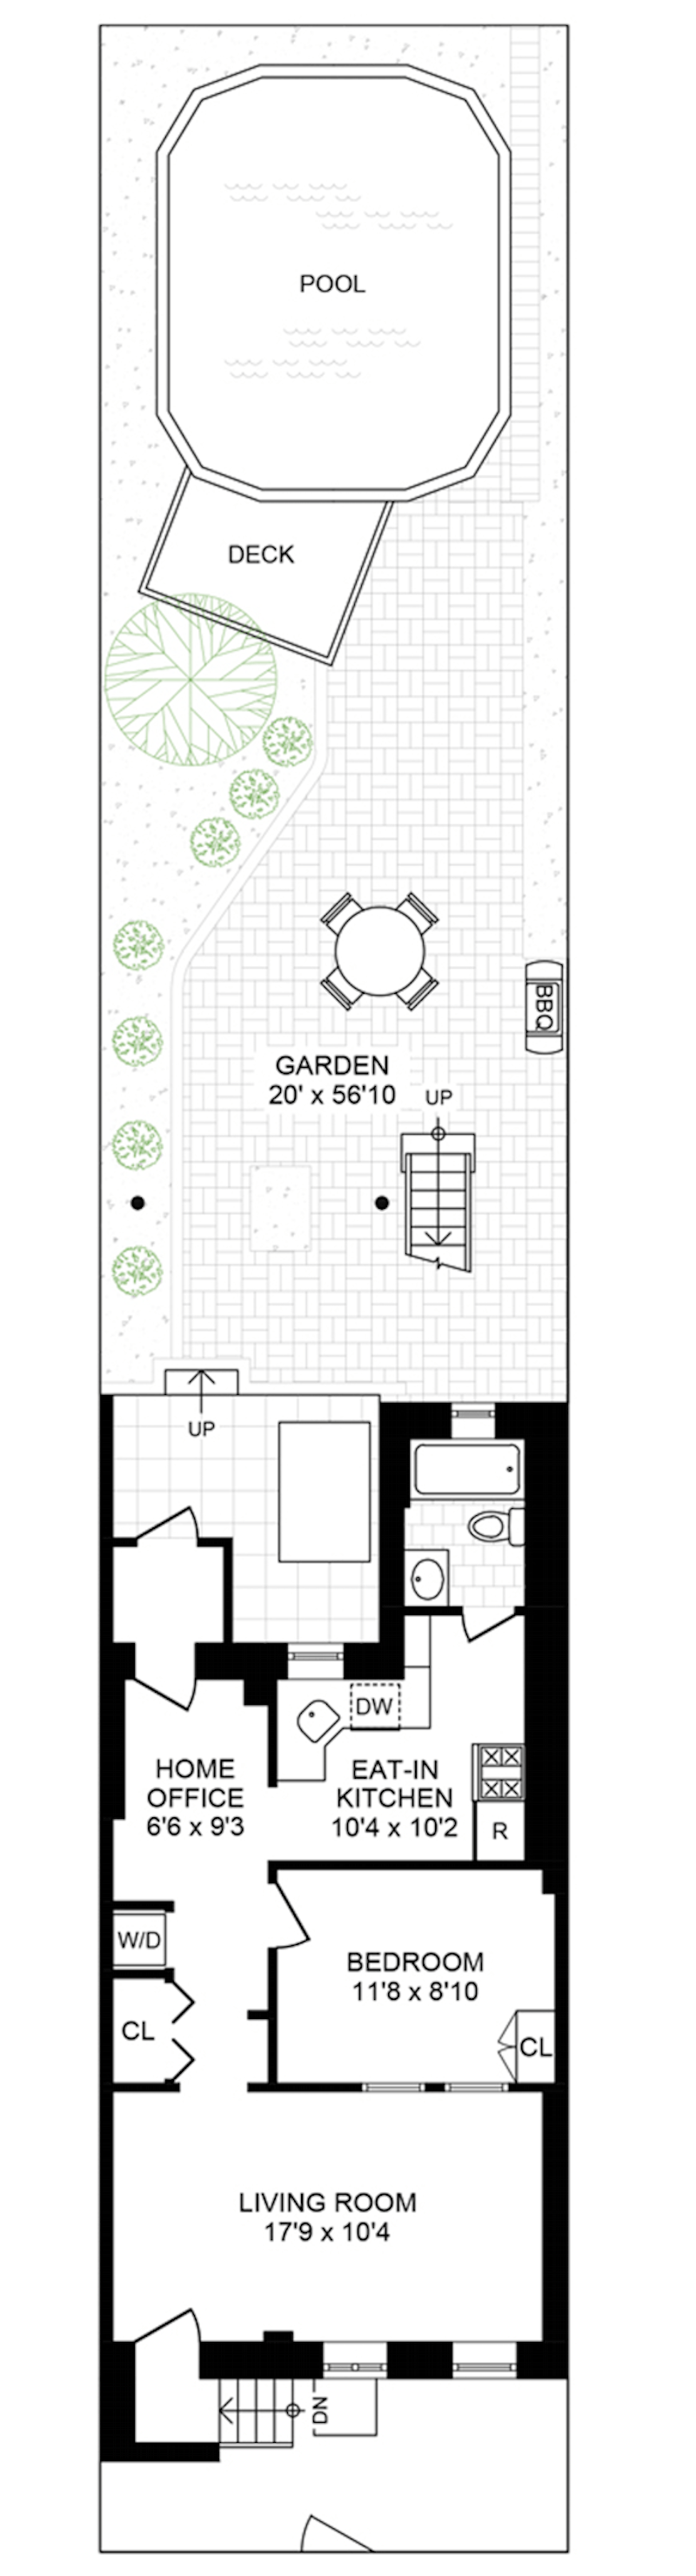 Floorplan for 609 18th Street, GARDEN